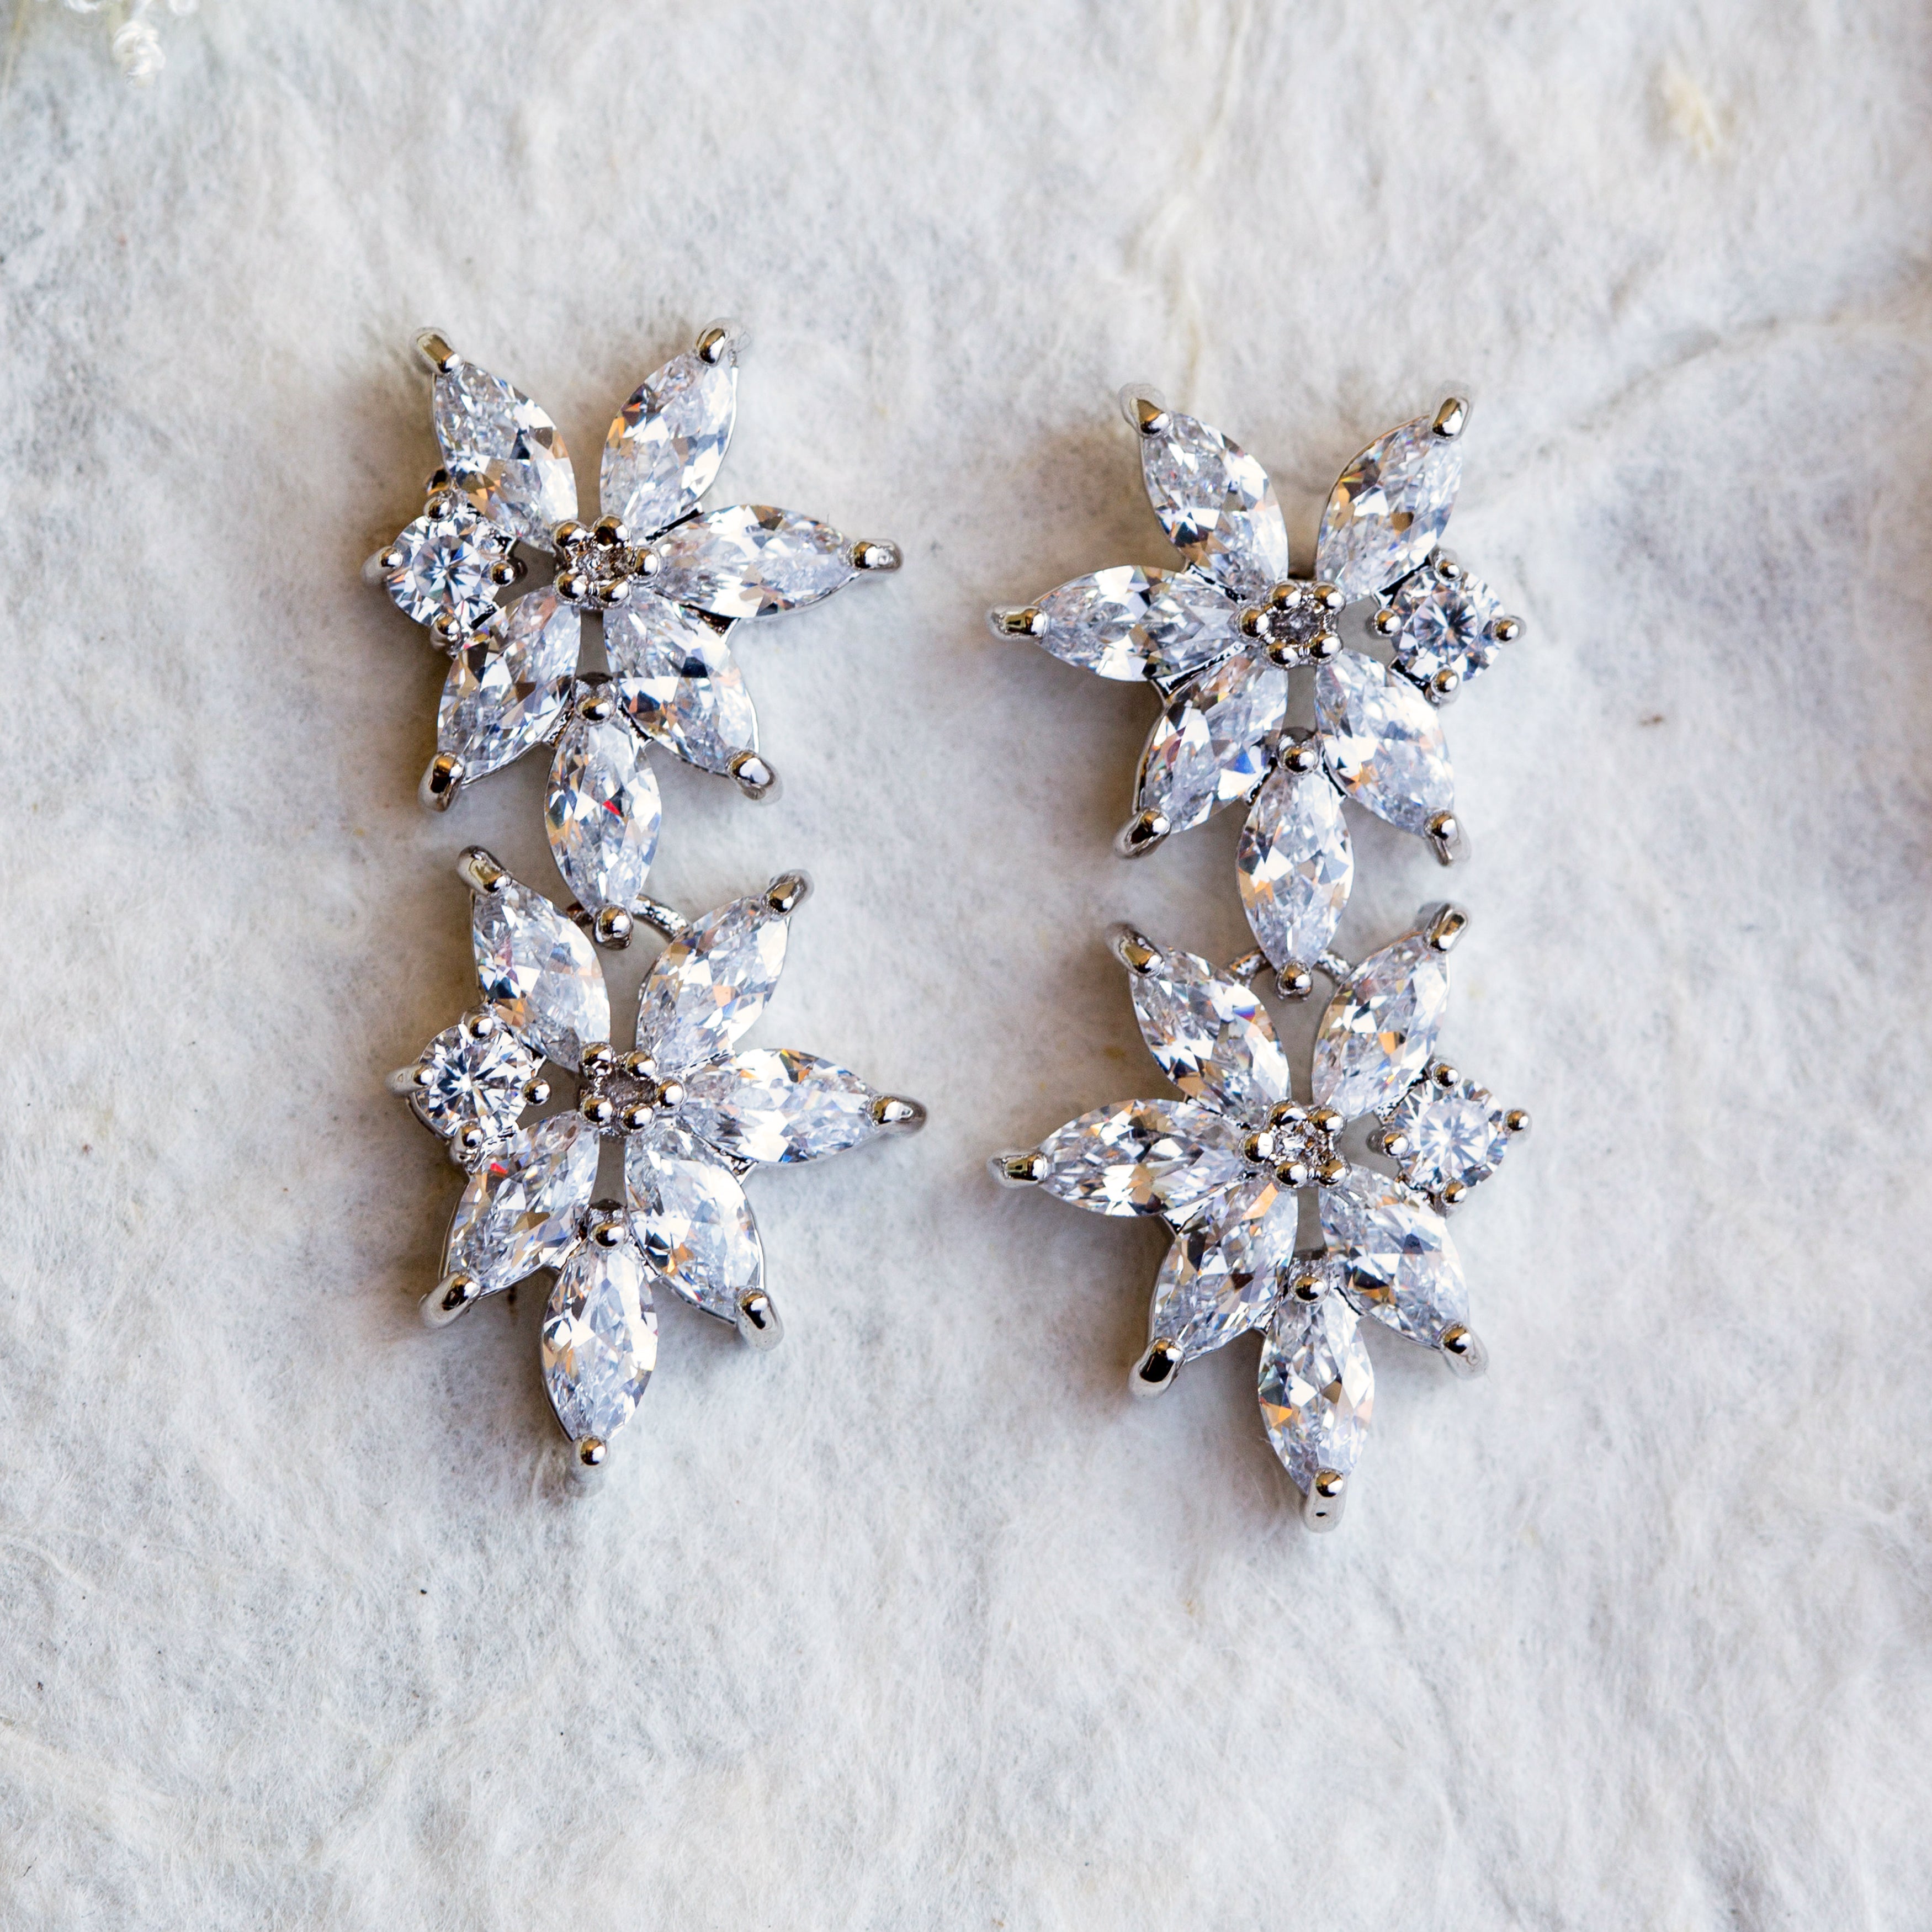 Matki crystal earrings